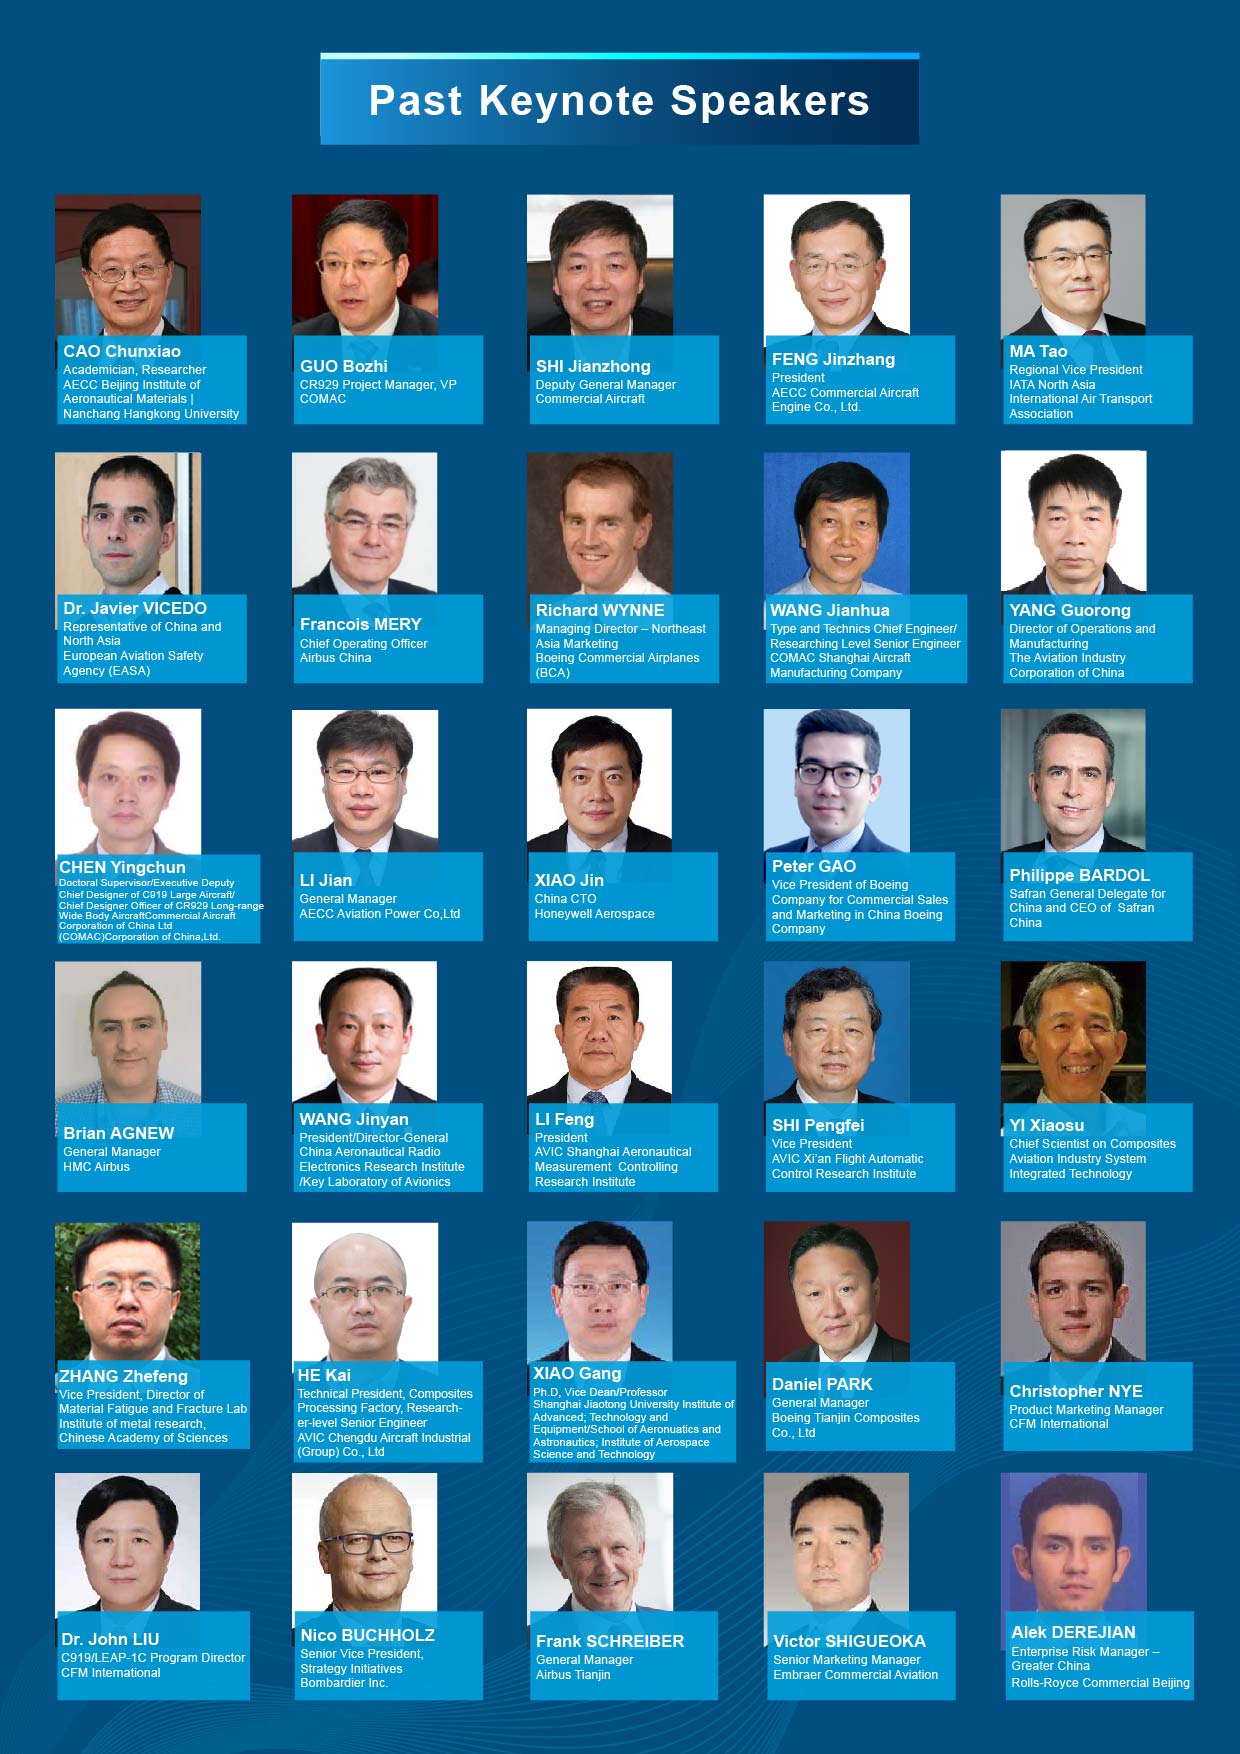 2022China Aviation Industry Summit